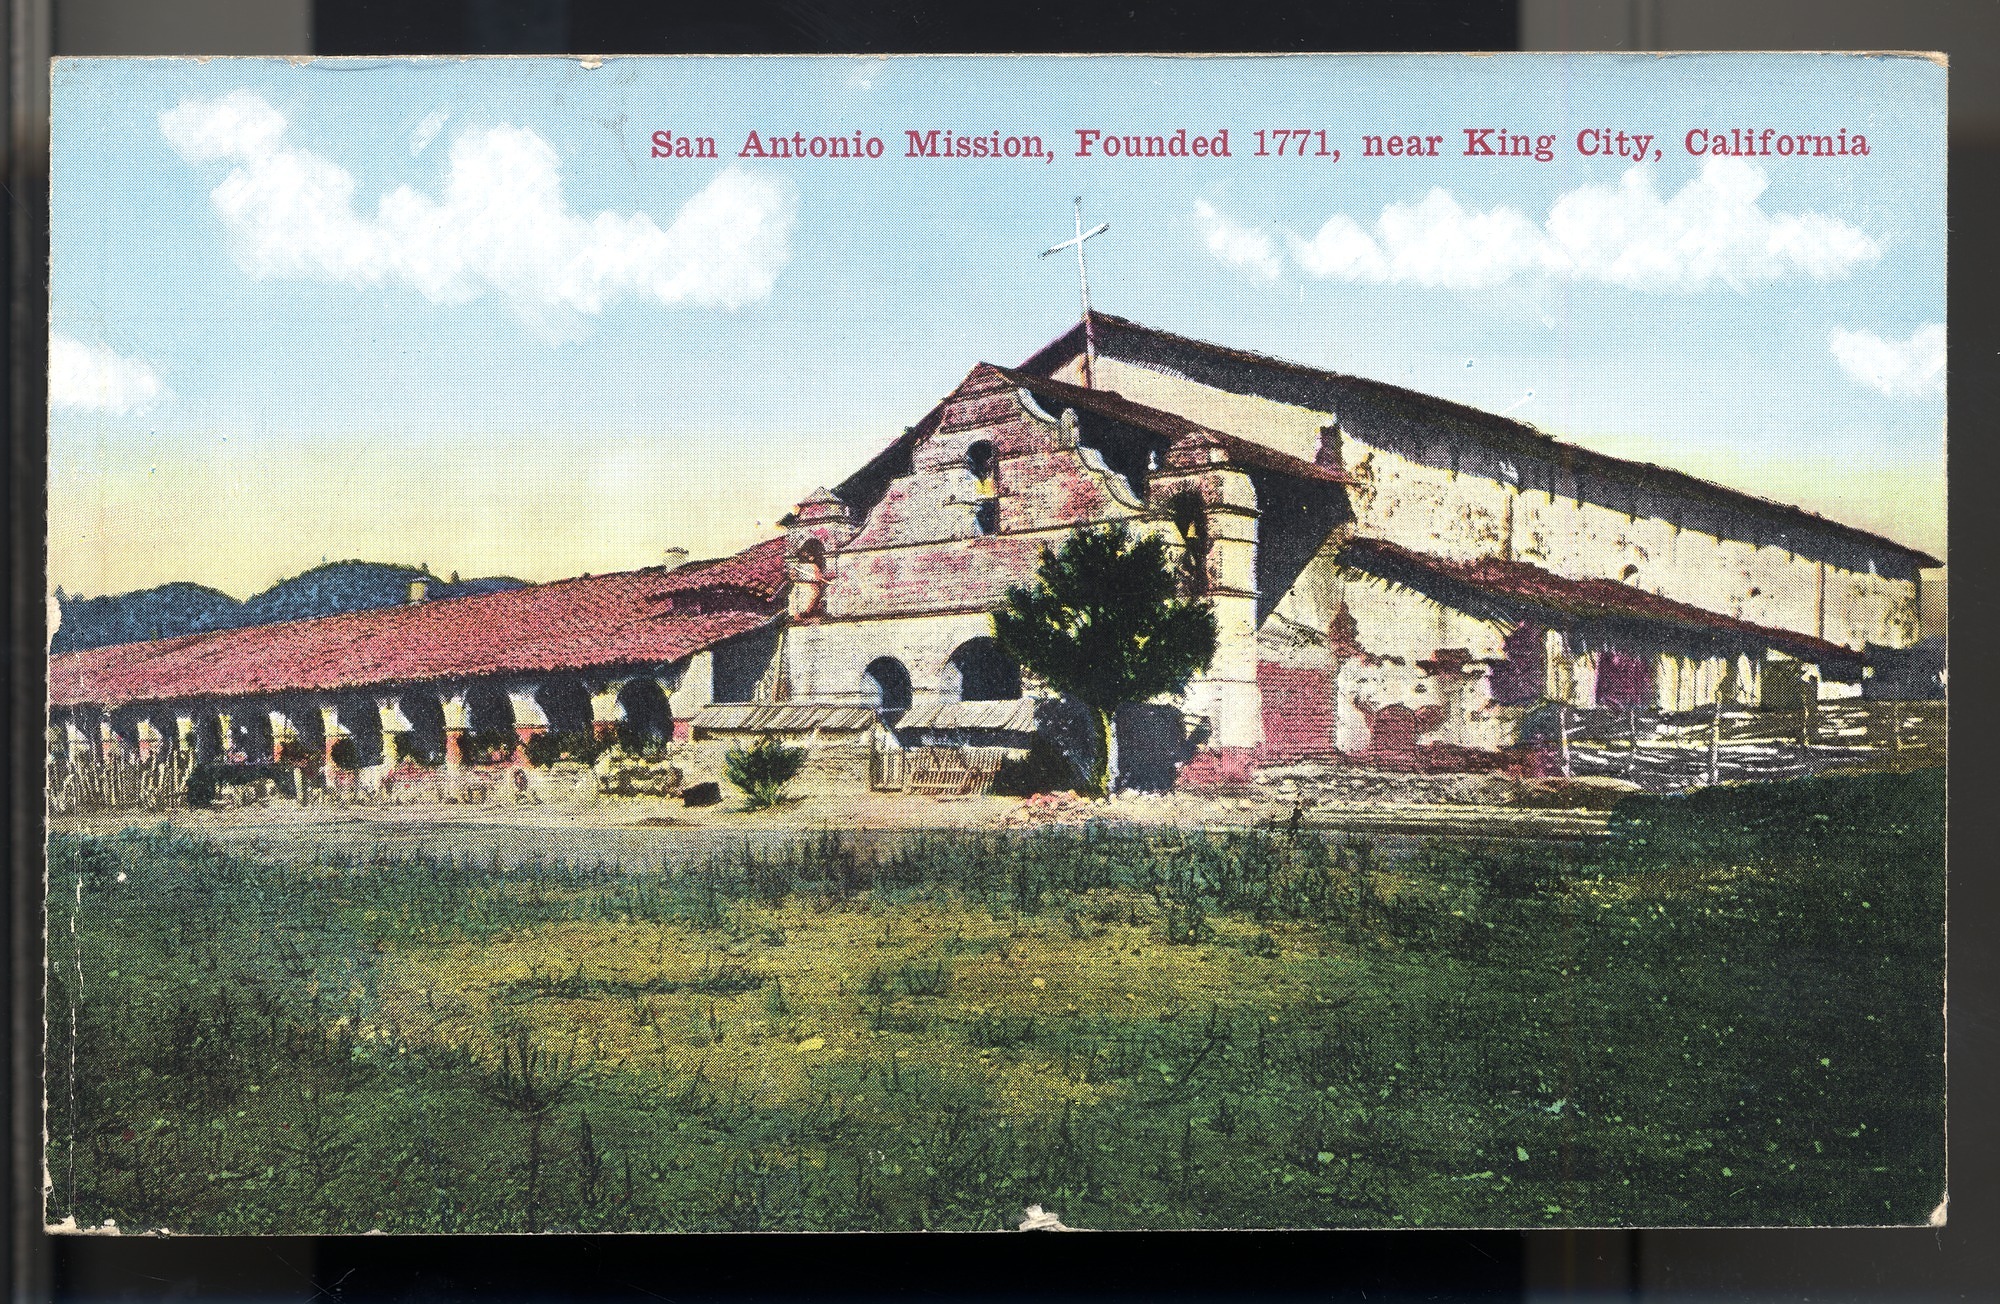 Postcard 12 – San Antonio Mission, Founded 1771, near King City, California. Van Ornum Colorprint Company. 1908-1921. NMAH 1986.0639.0485.